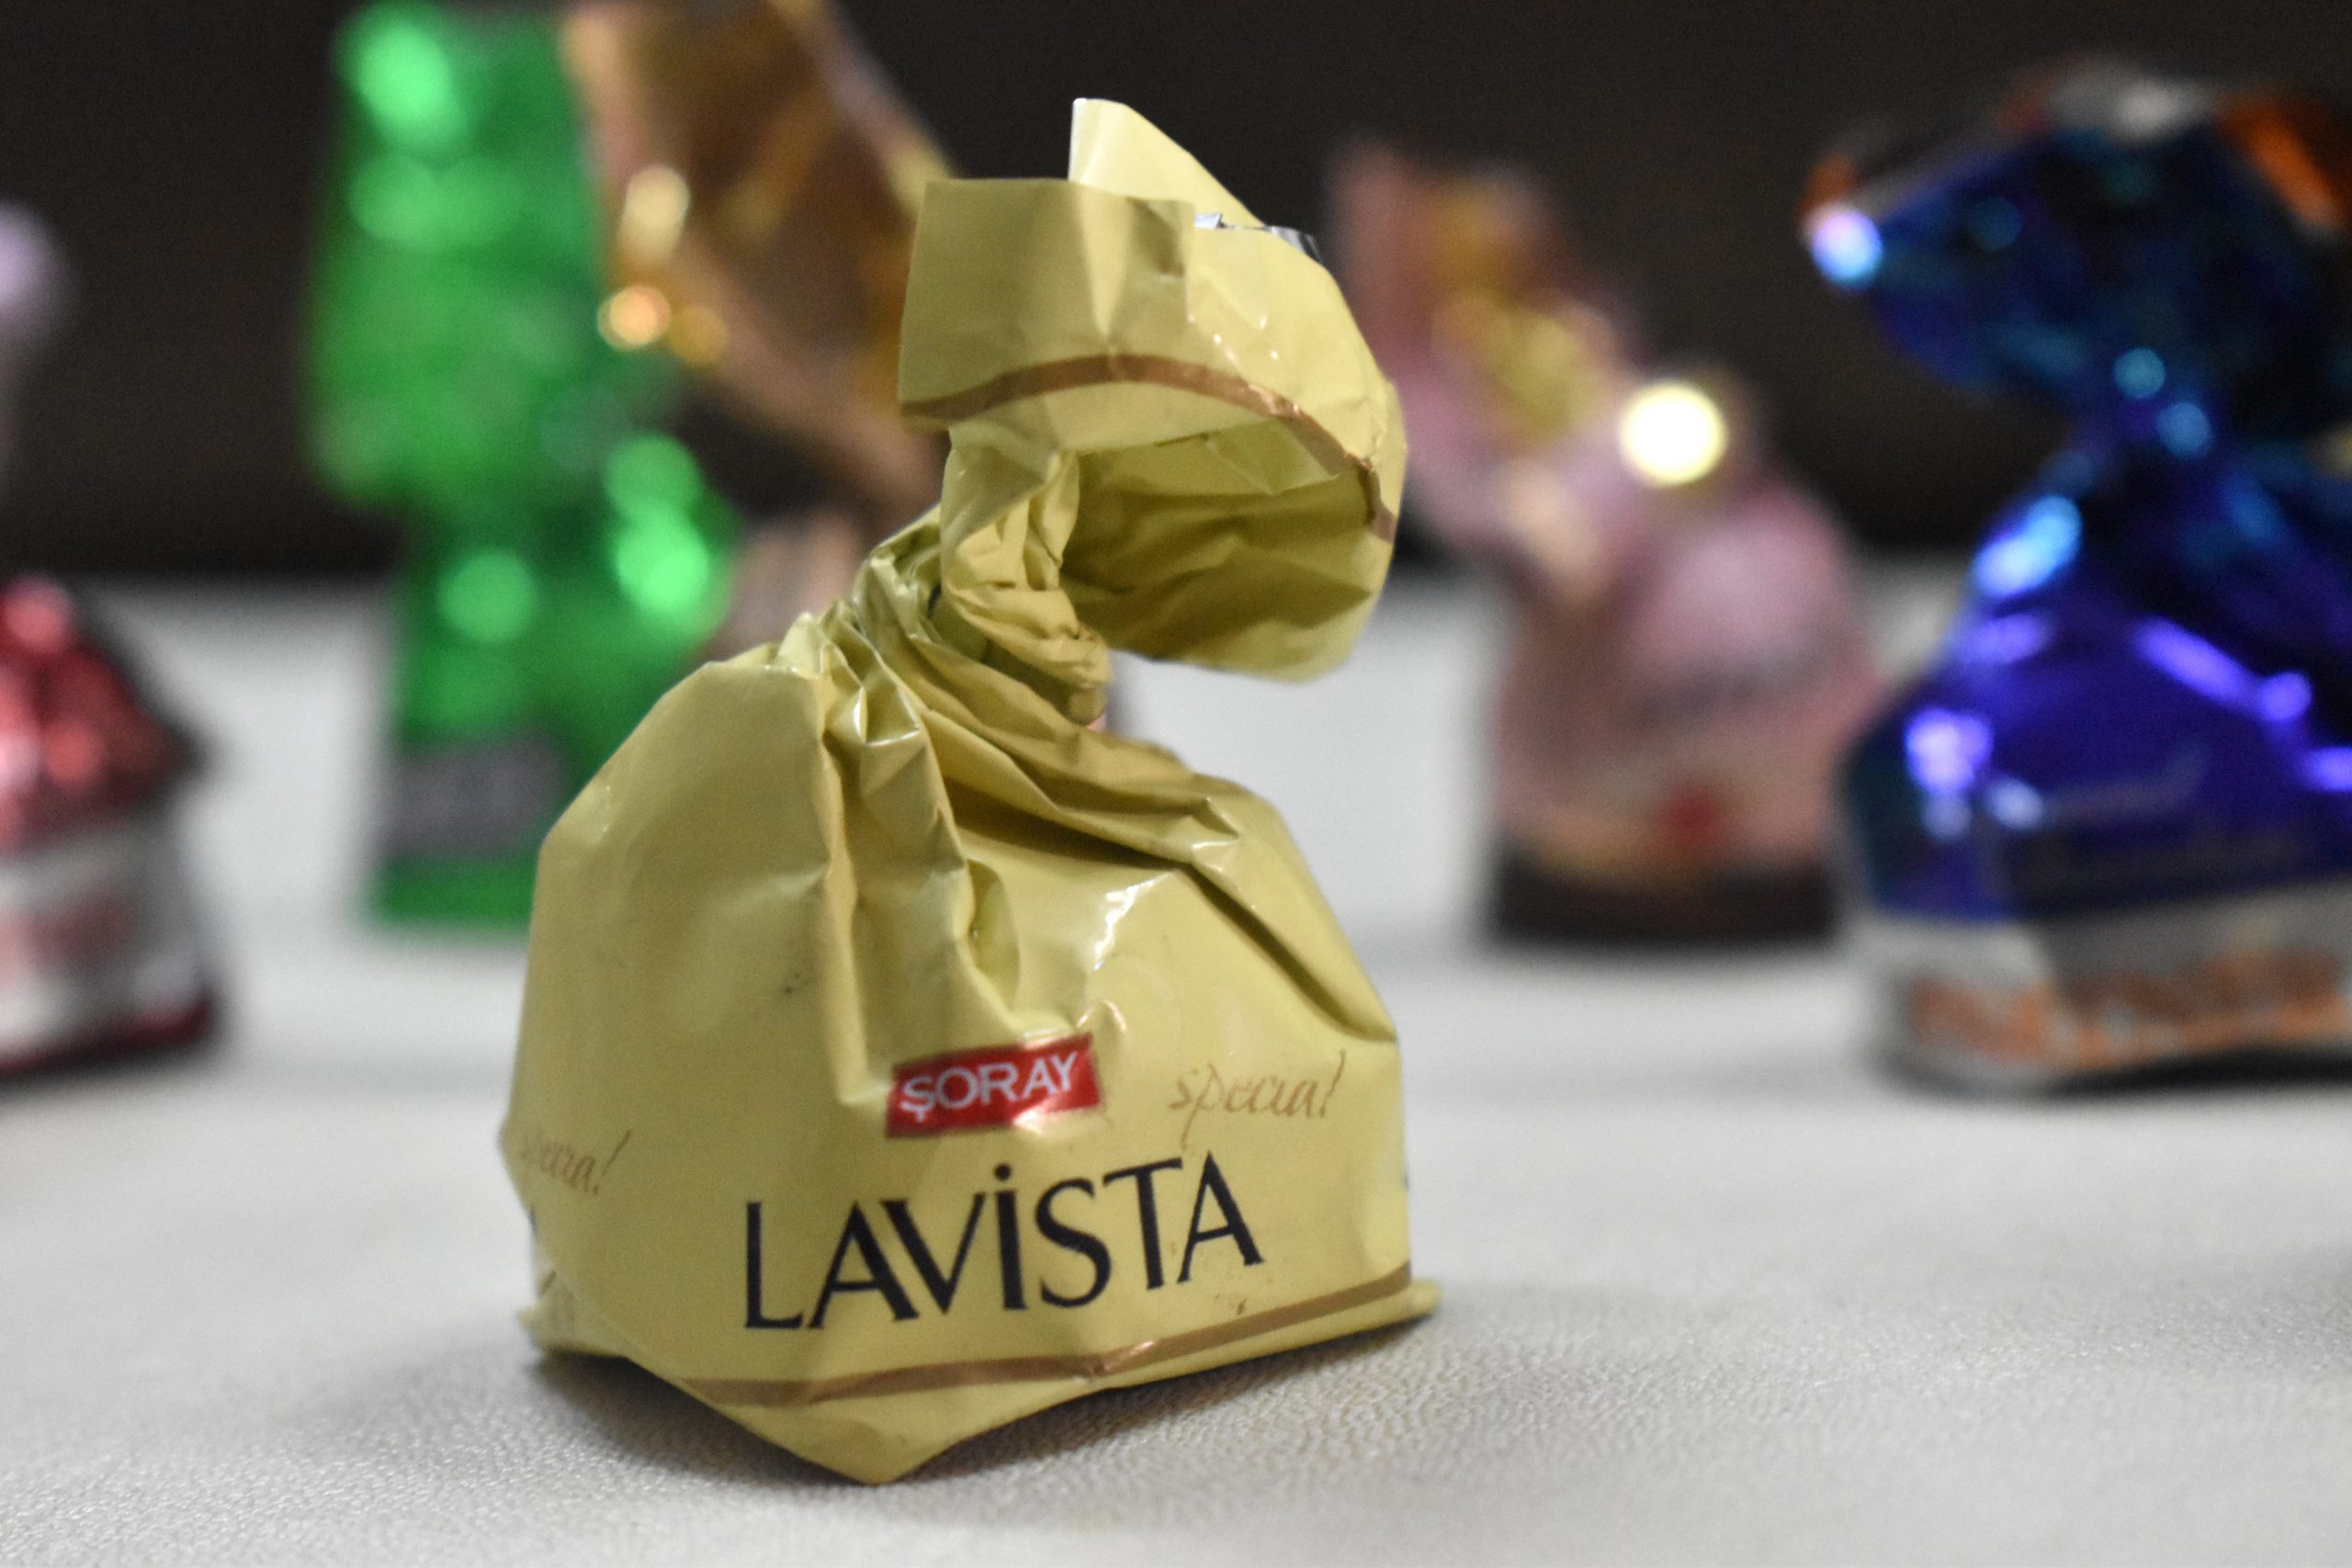 Lavista chocolate pack